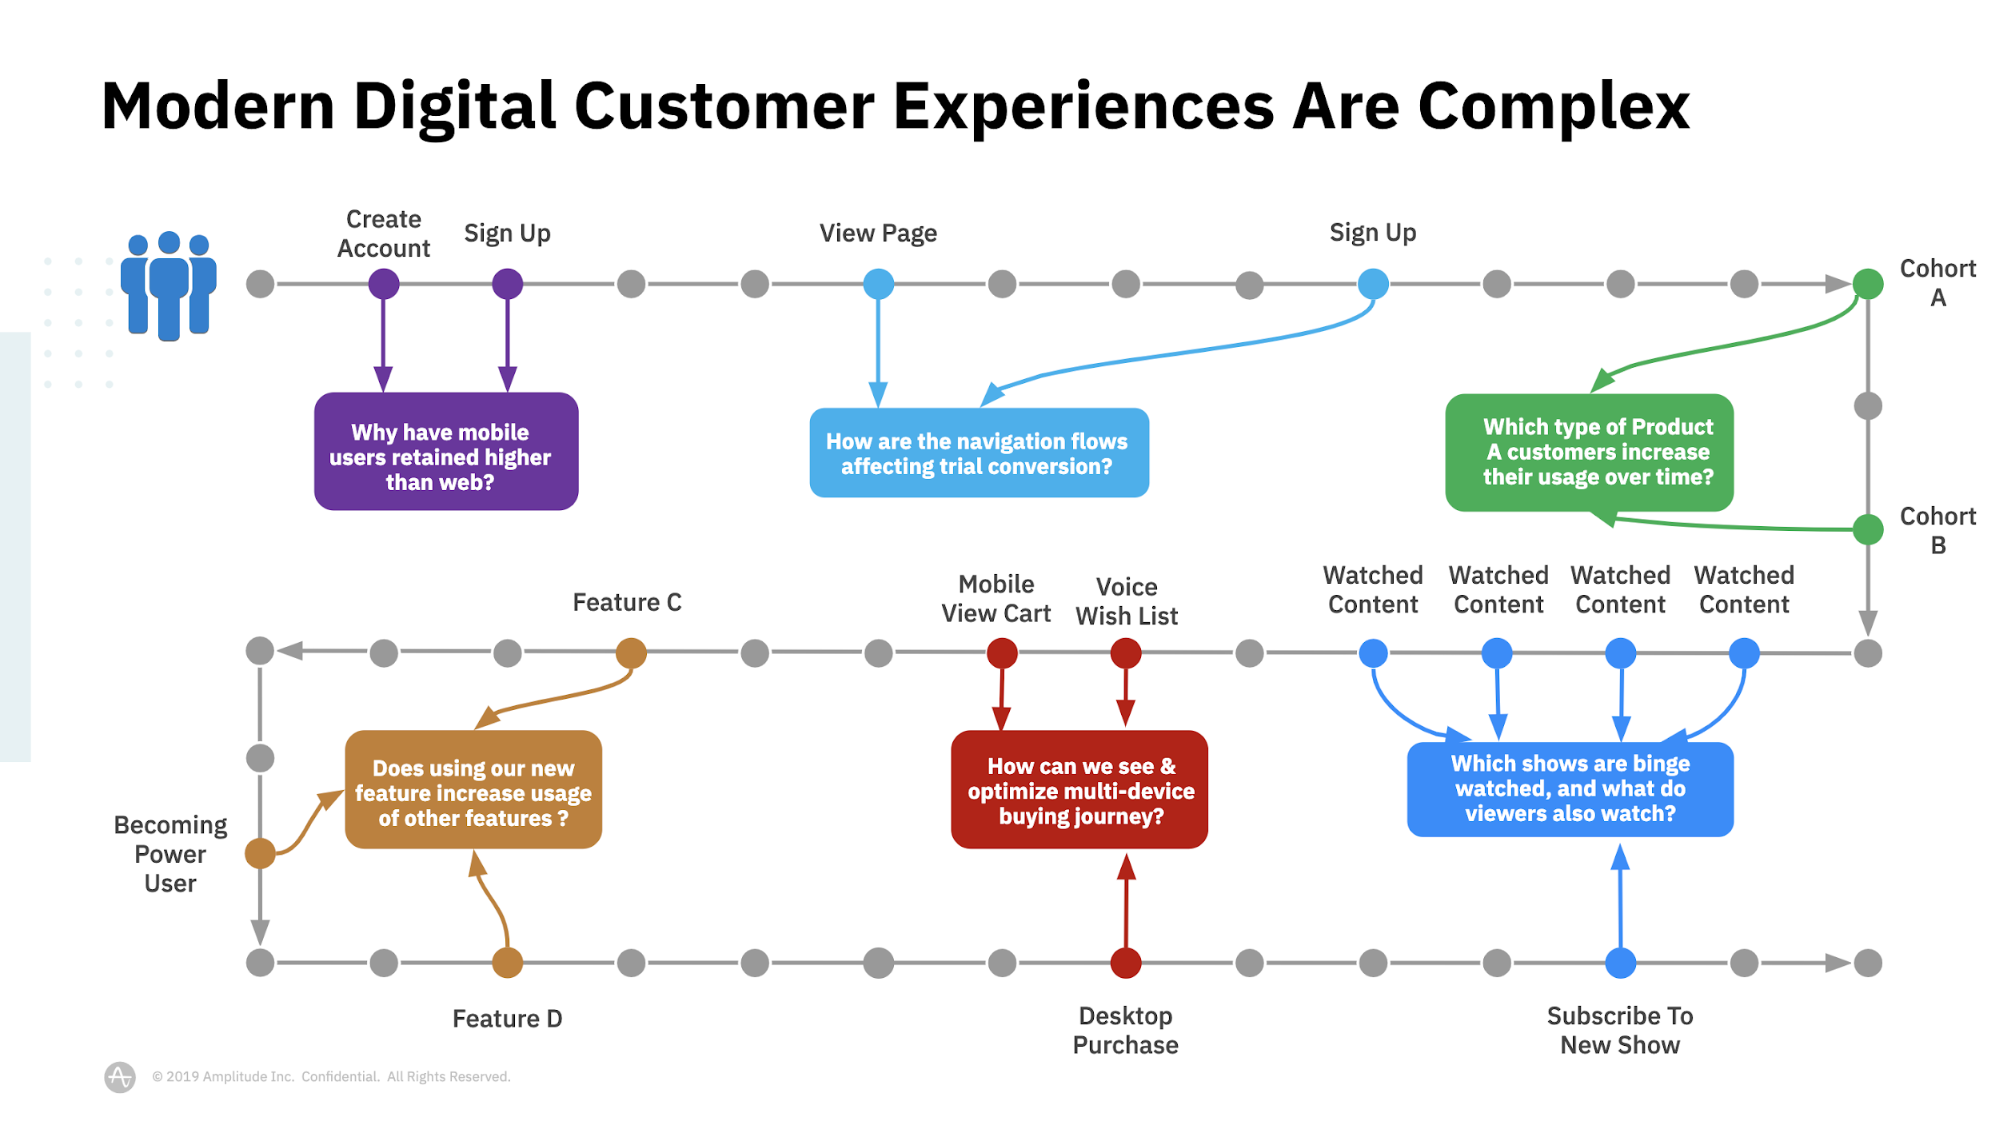 Modern digital customer experiences are complex